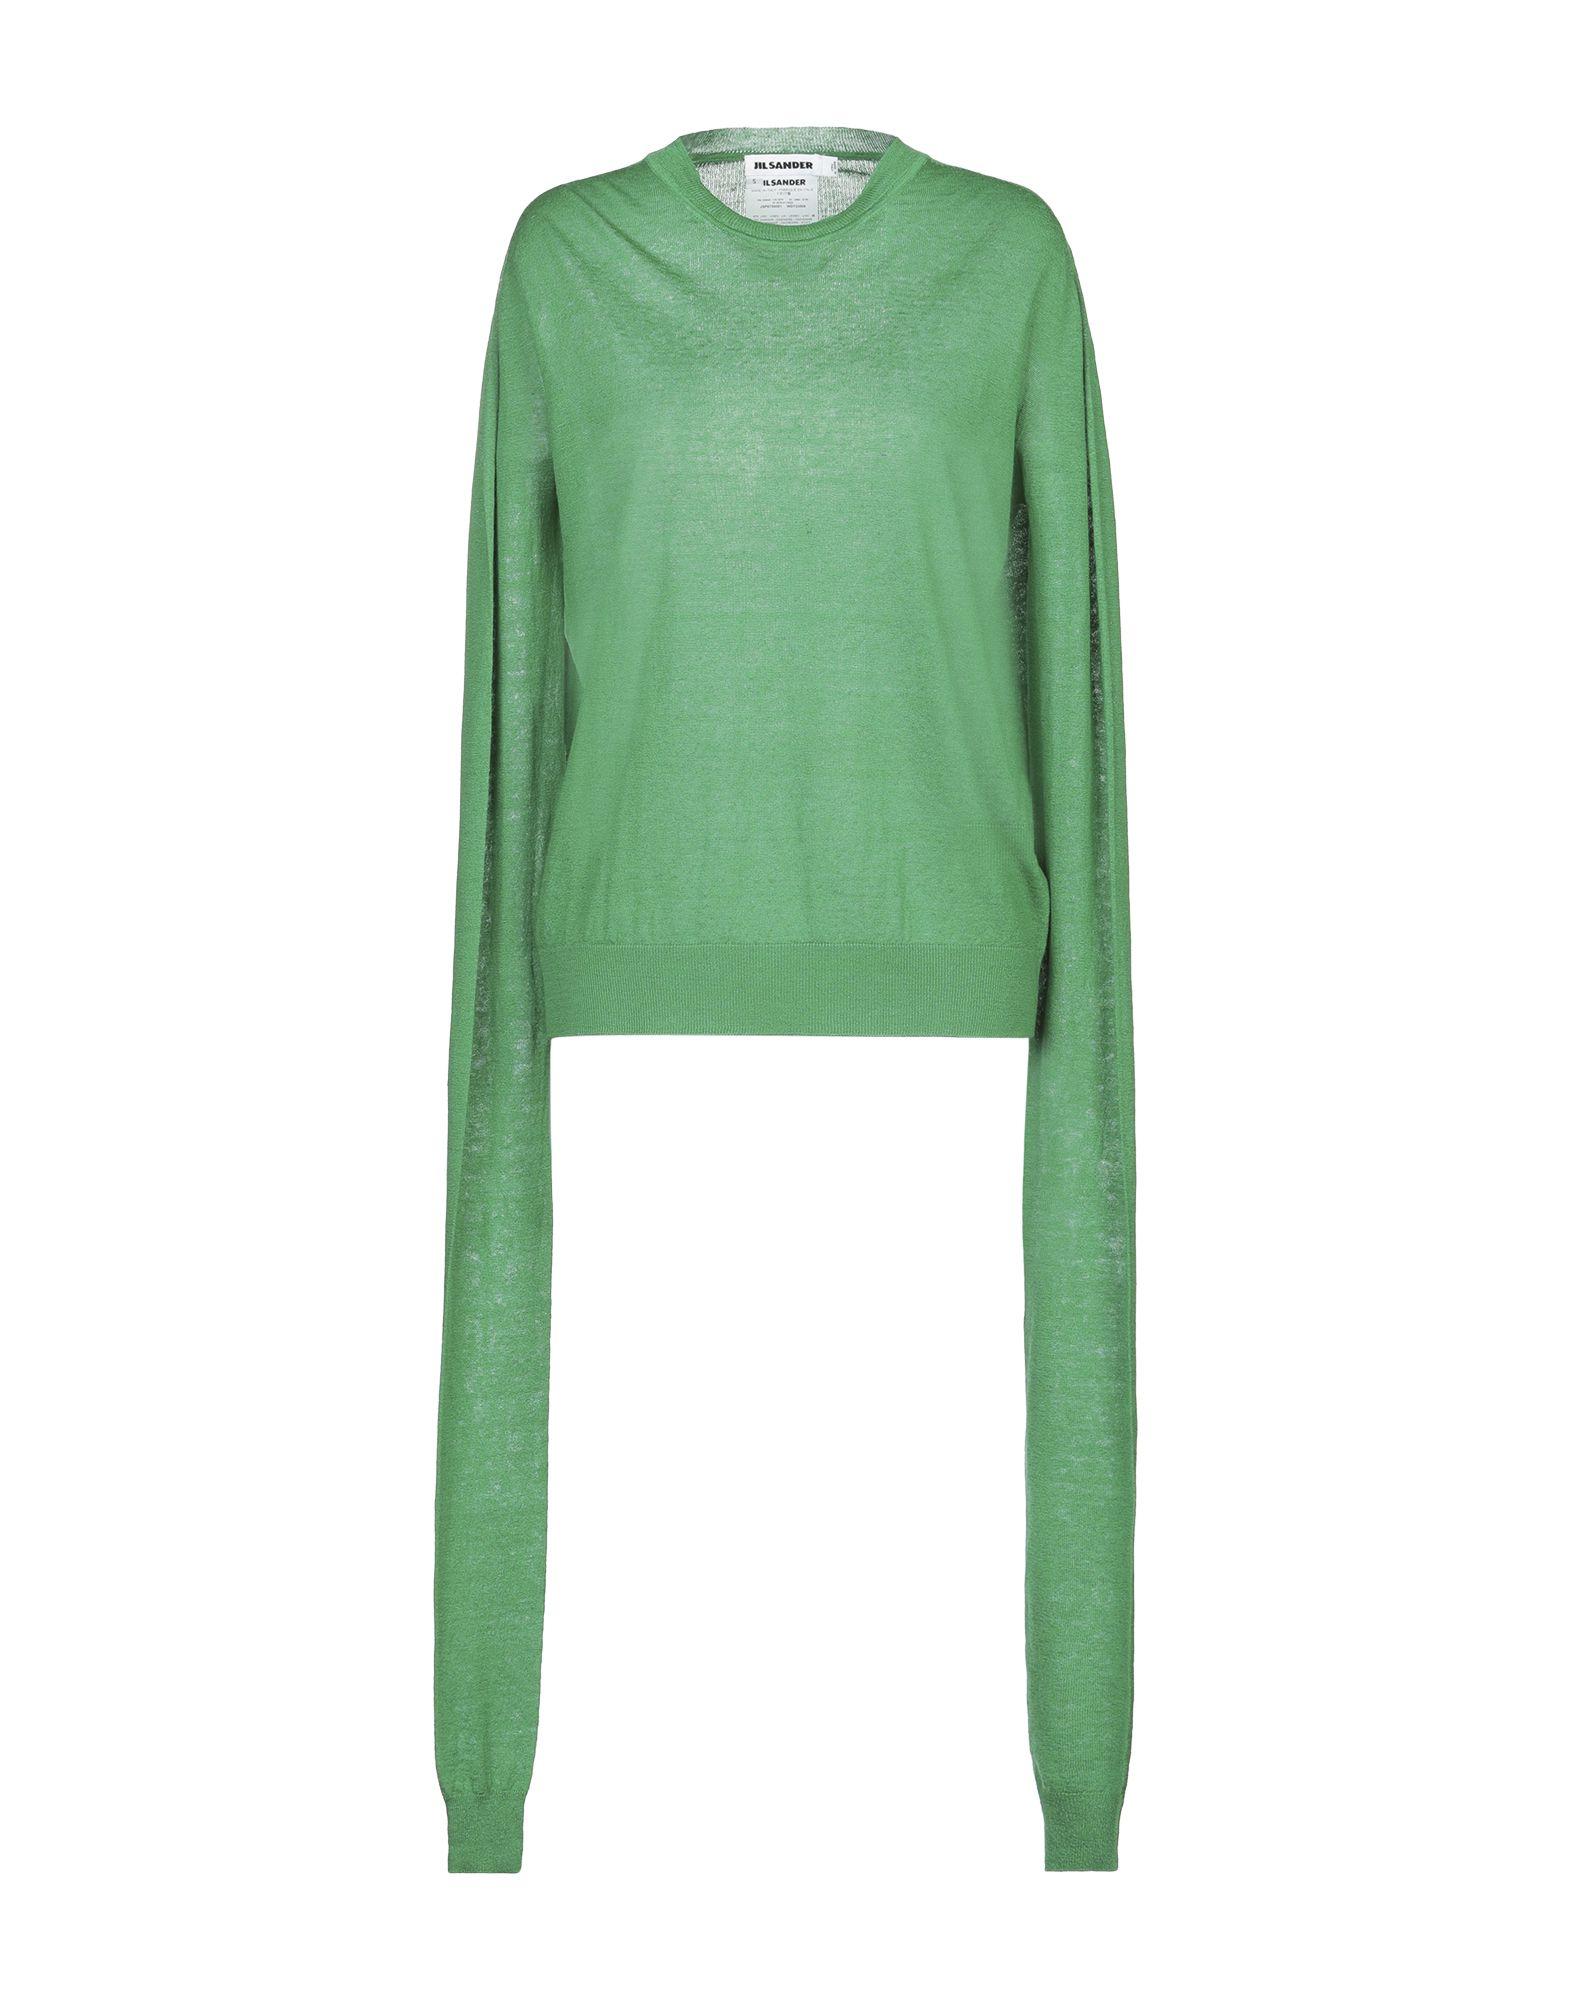 Jil Sander Cashmere Sweater in Green - Lyst